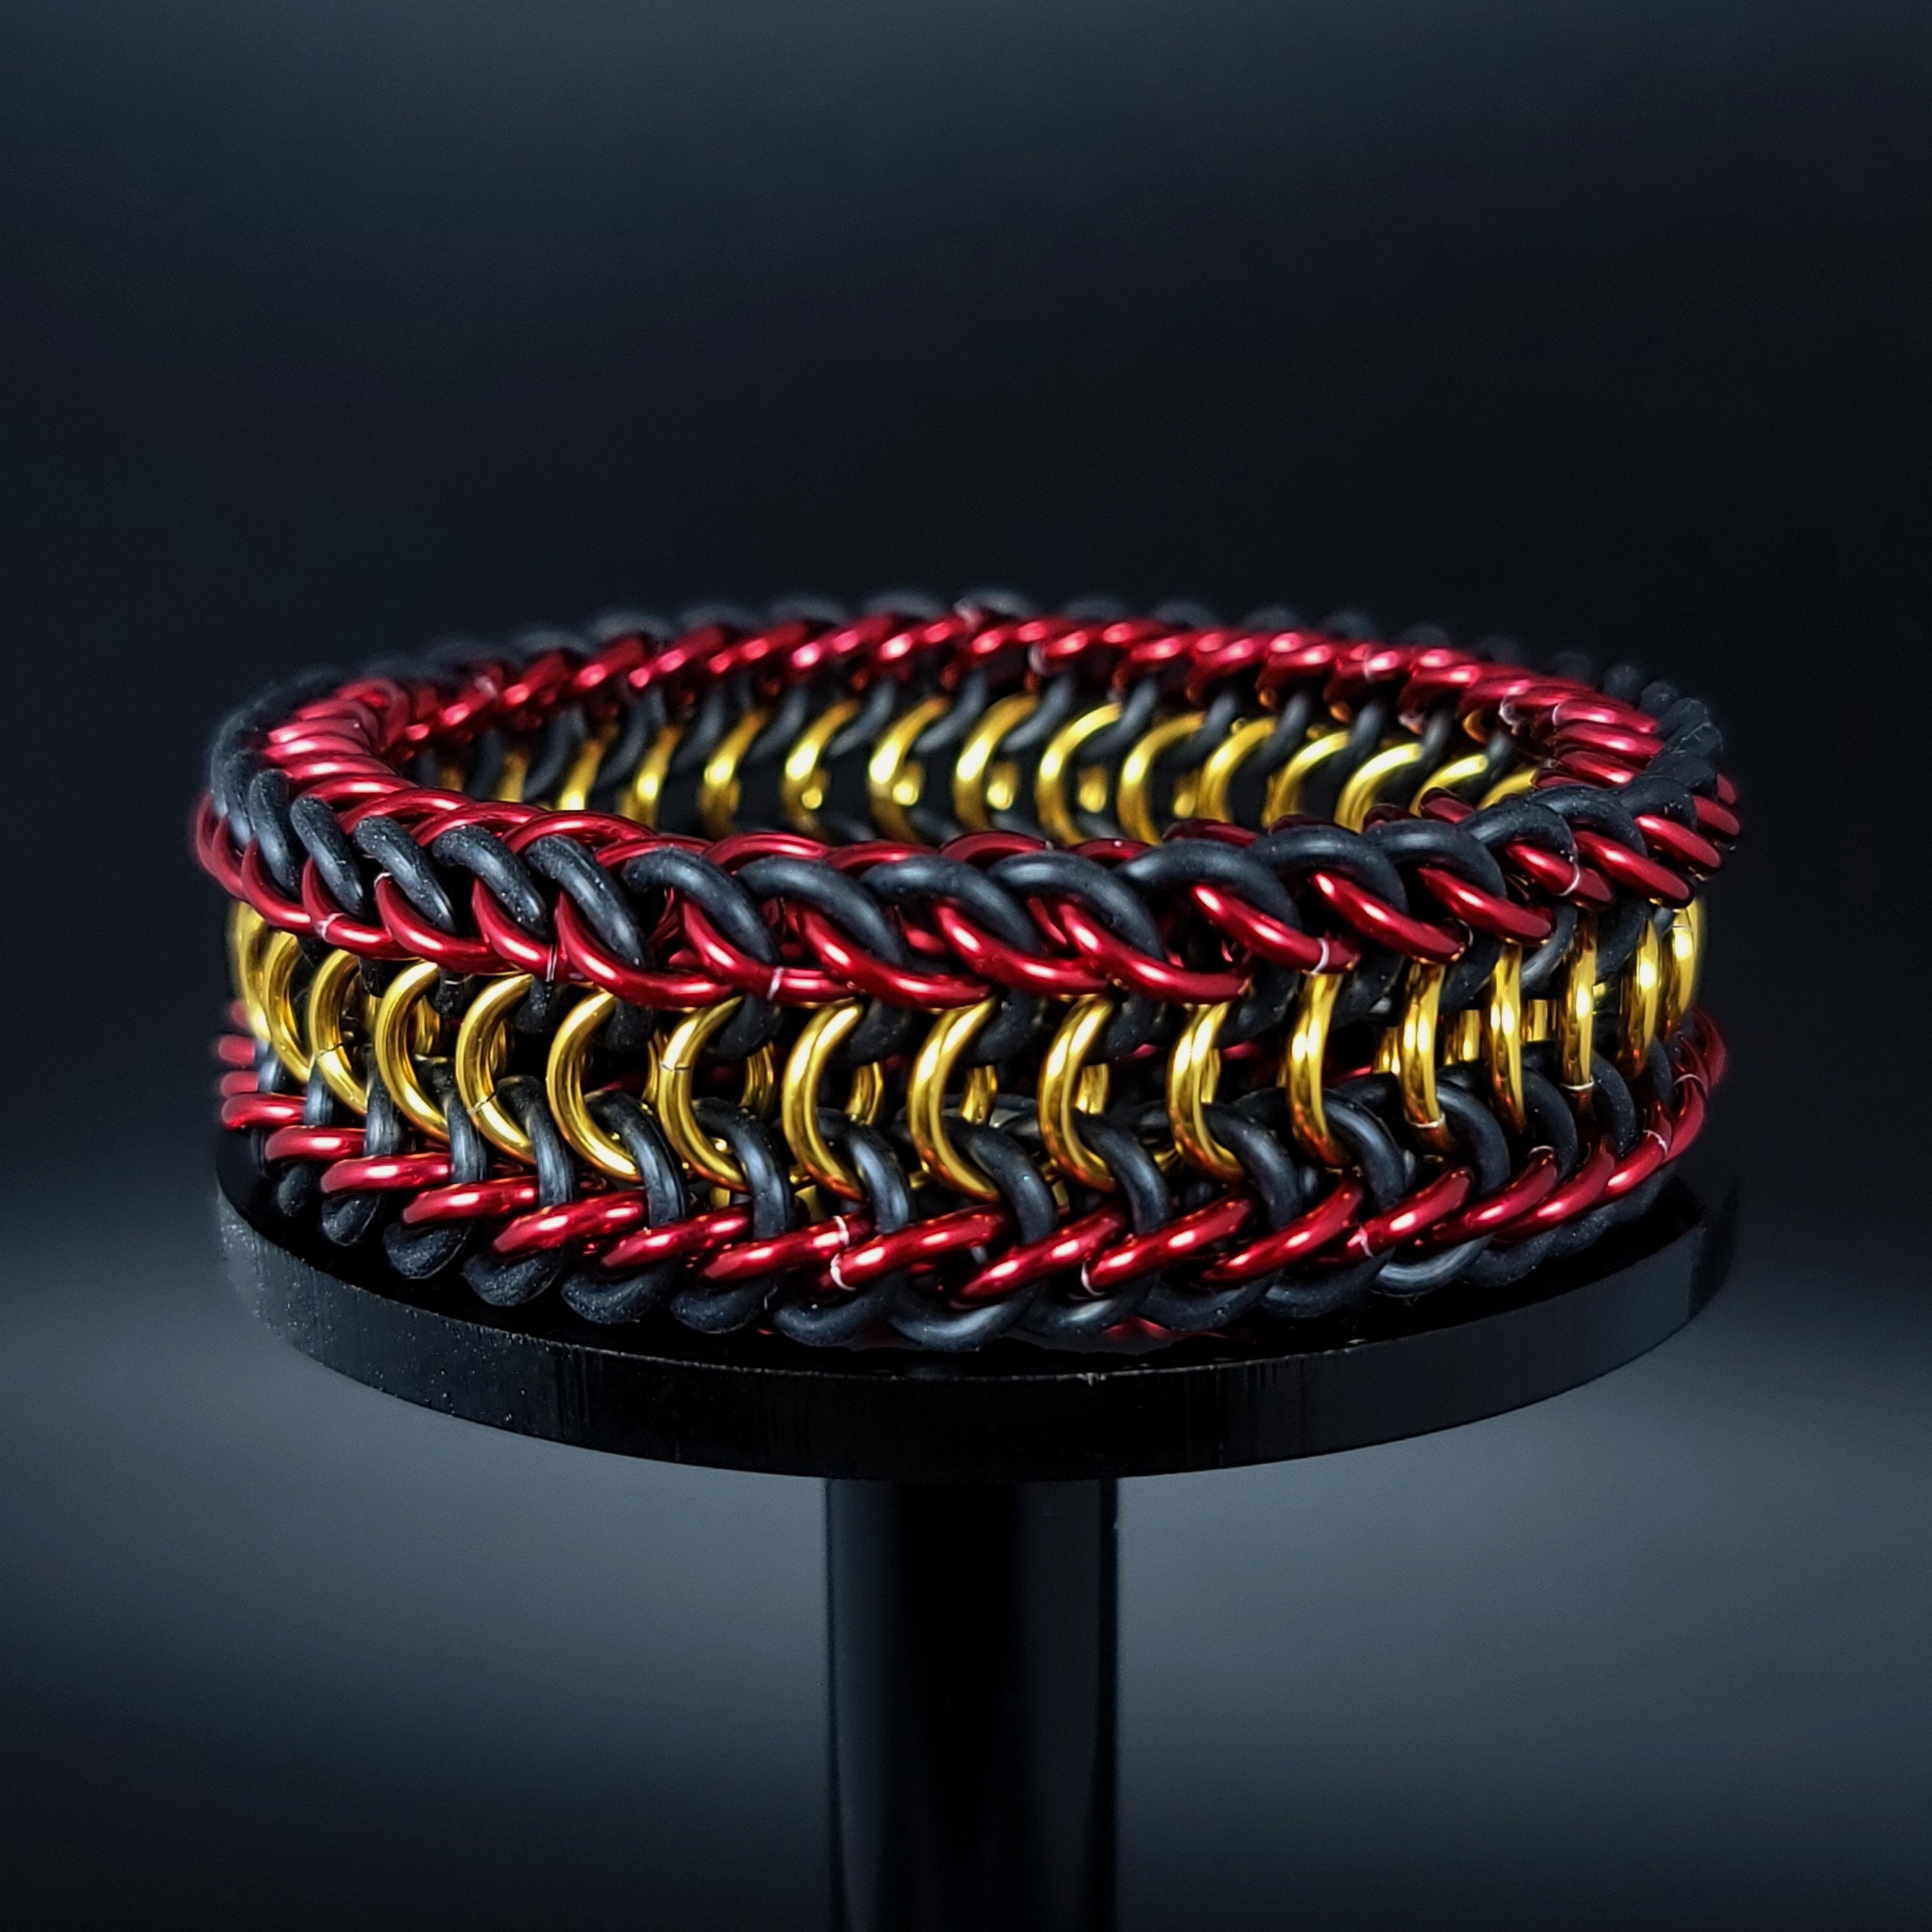 18K Gold Red Bracelet 18K Gold Braided Red String Bracelet – K Jewellery Co.